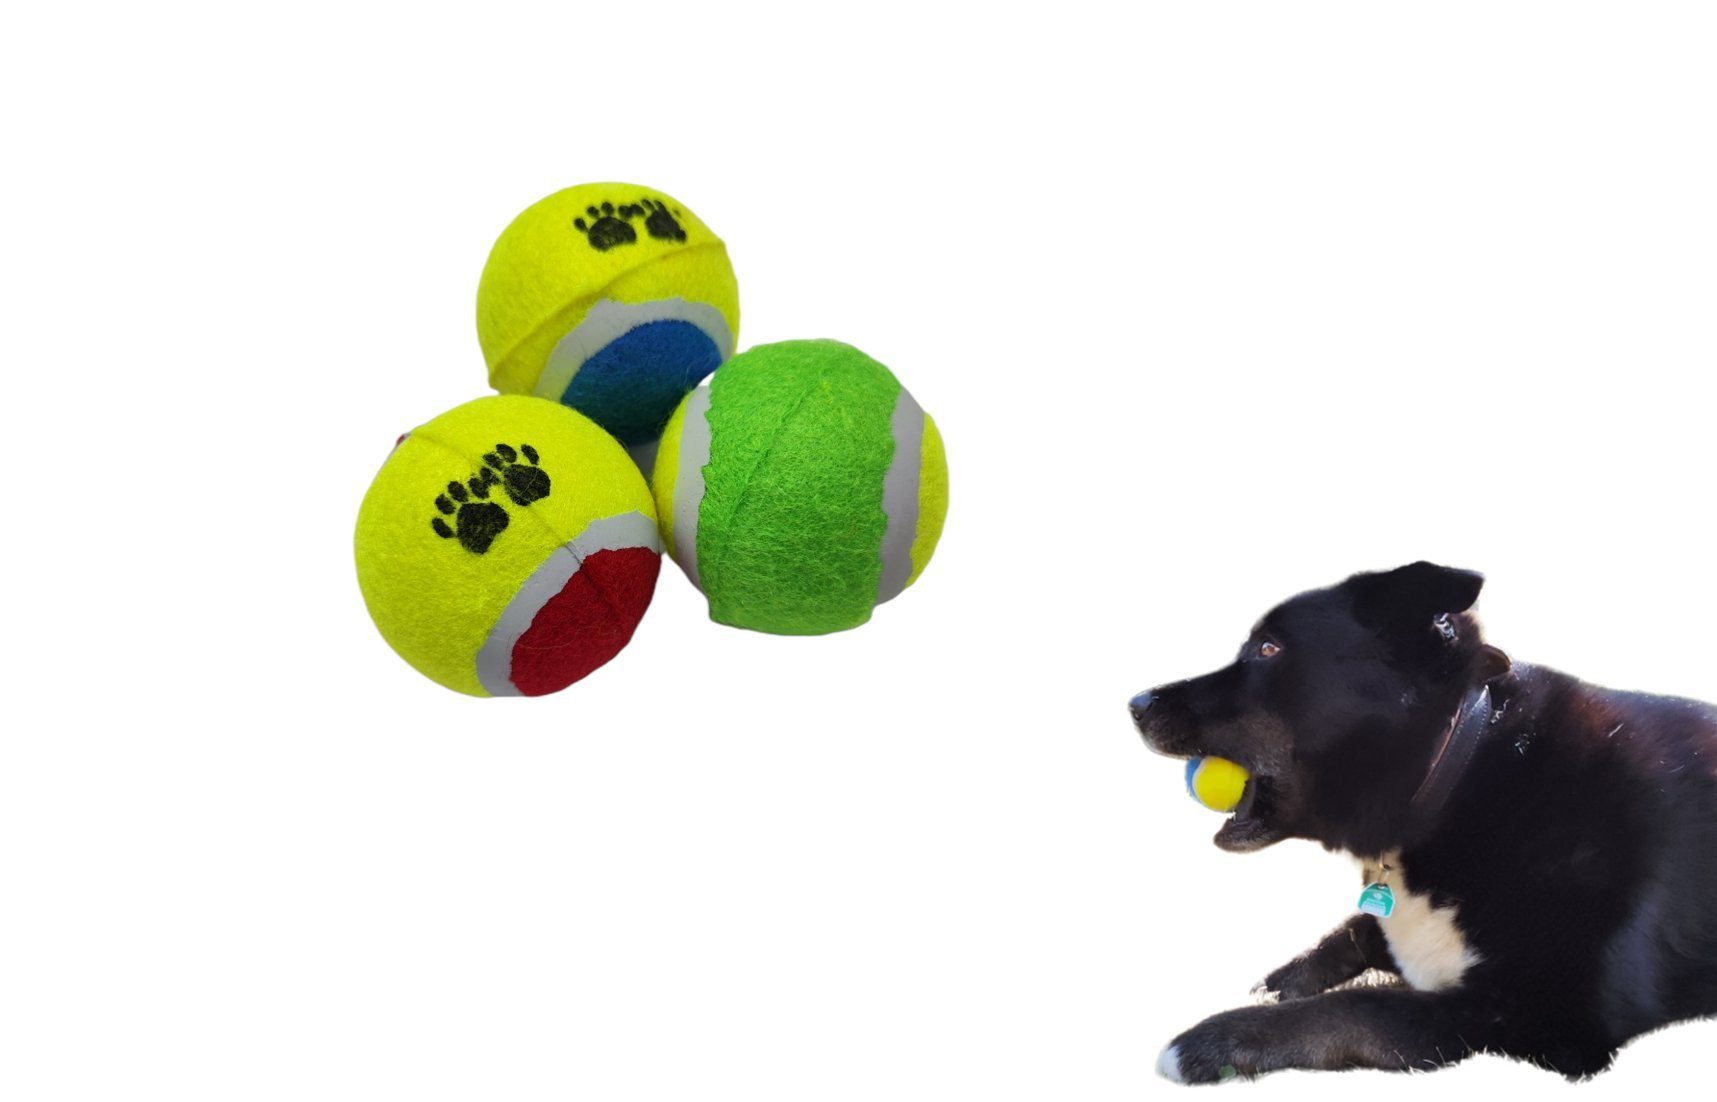 HMH-Shop Tierball Hundebälle bunt Hundespielzeug Haustier Katze Ball Spielen Hund Tennisball Dog Toys Hundeball Spaß Agility Training Ausdauer auspowern Tennisbälle Ø ~6,5cm Helle Farben gut auffindbar, Helle Farben, gut auffindbar 3 Bälle